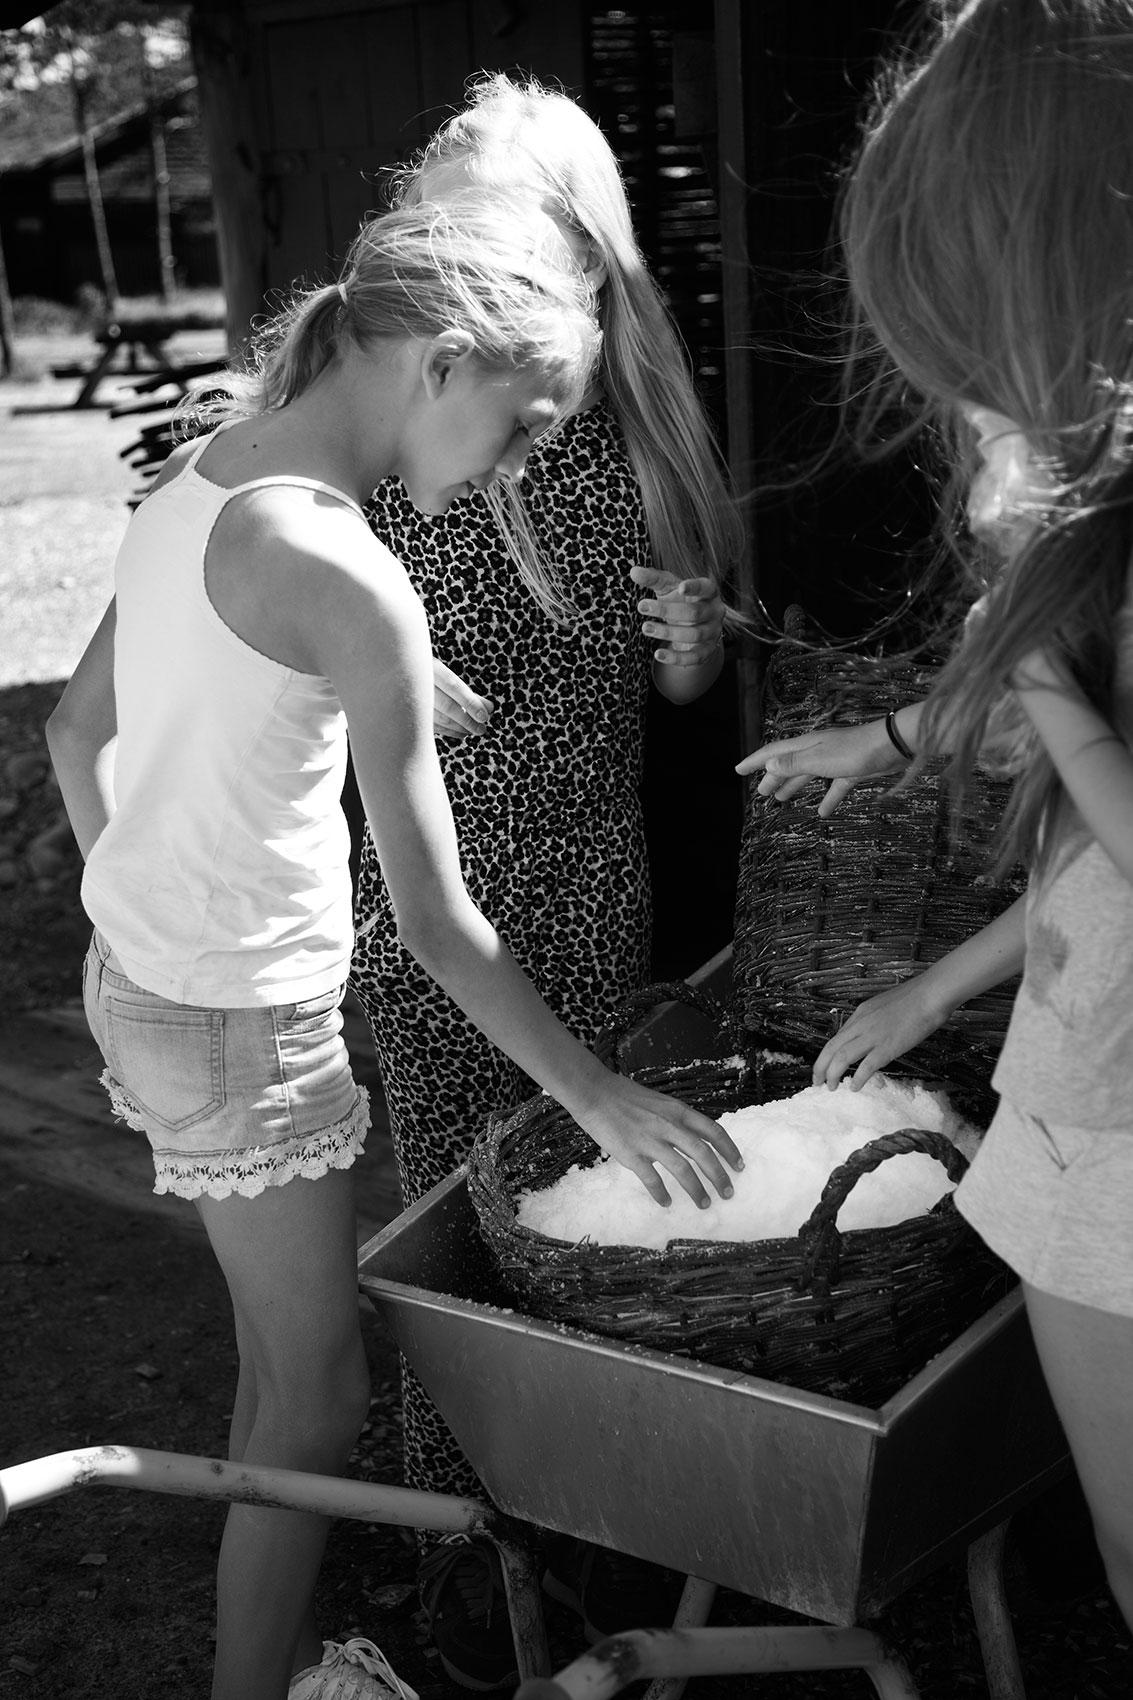 Laesoe Salt • Local Danish Children Touching Freshly Produced Salt • Advertising & Lifestyle Food Photography